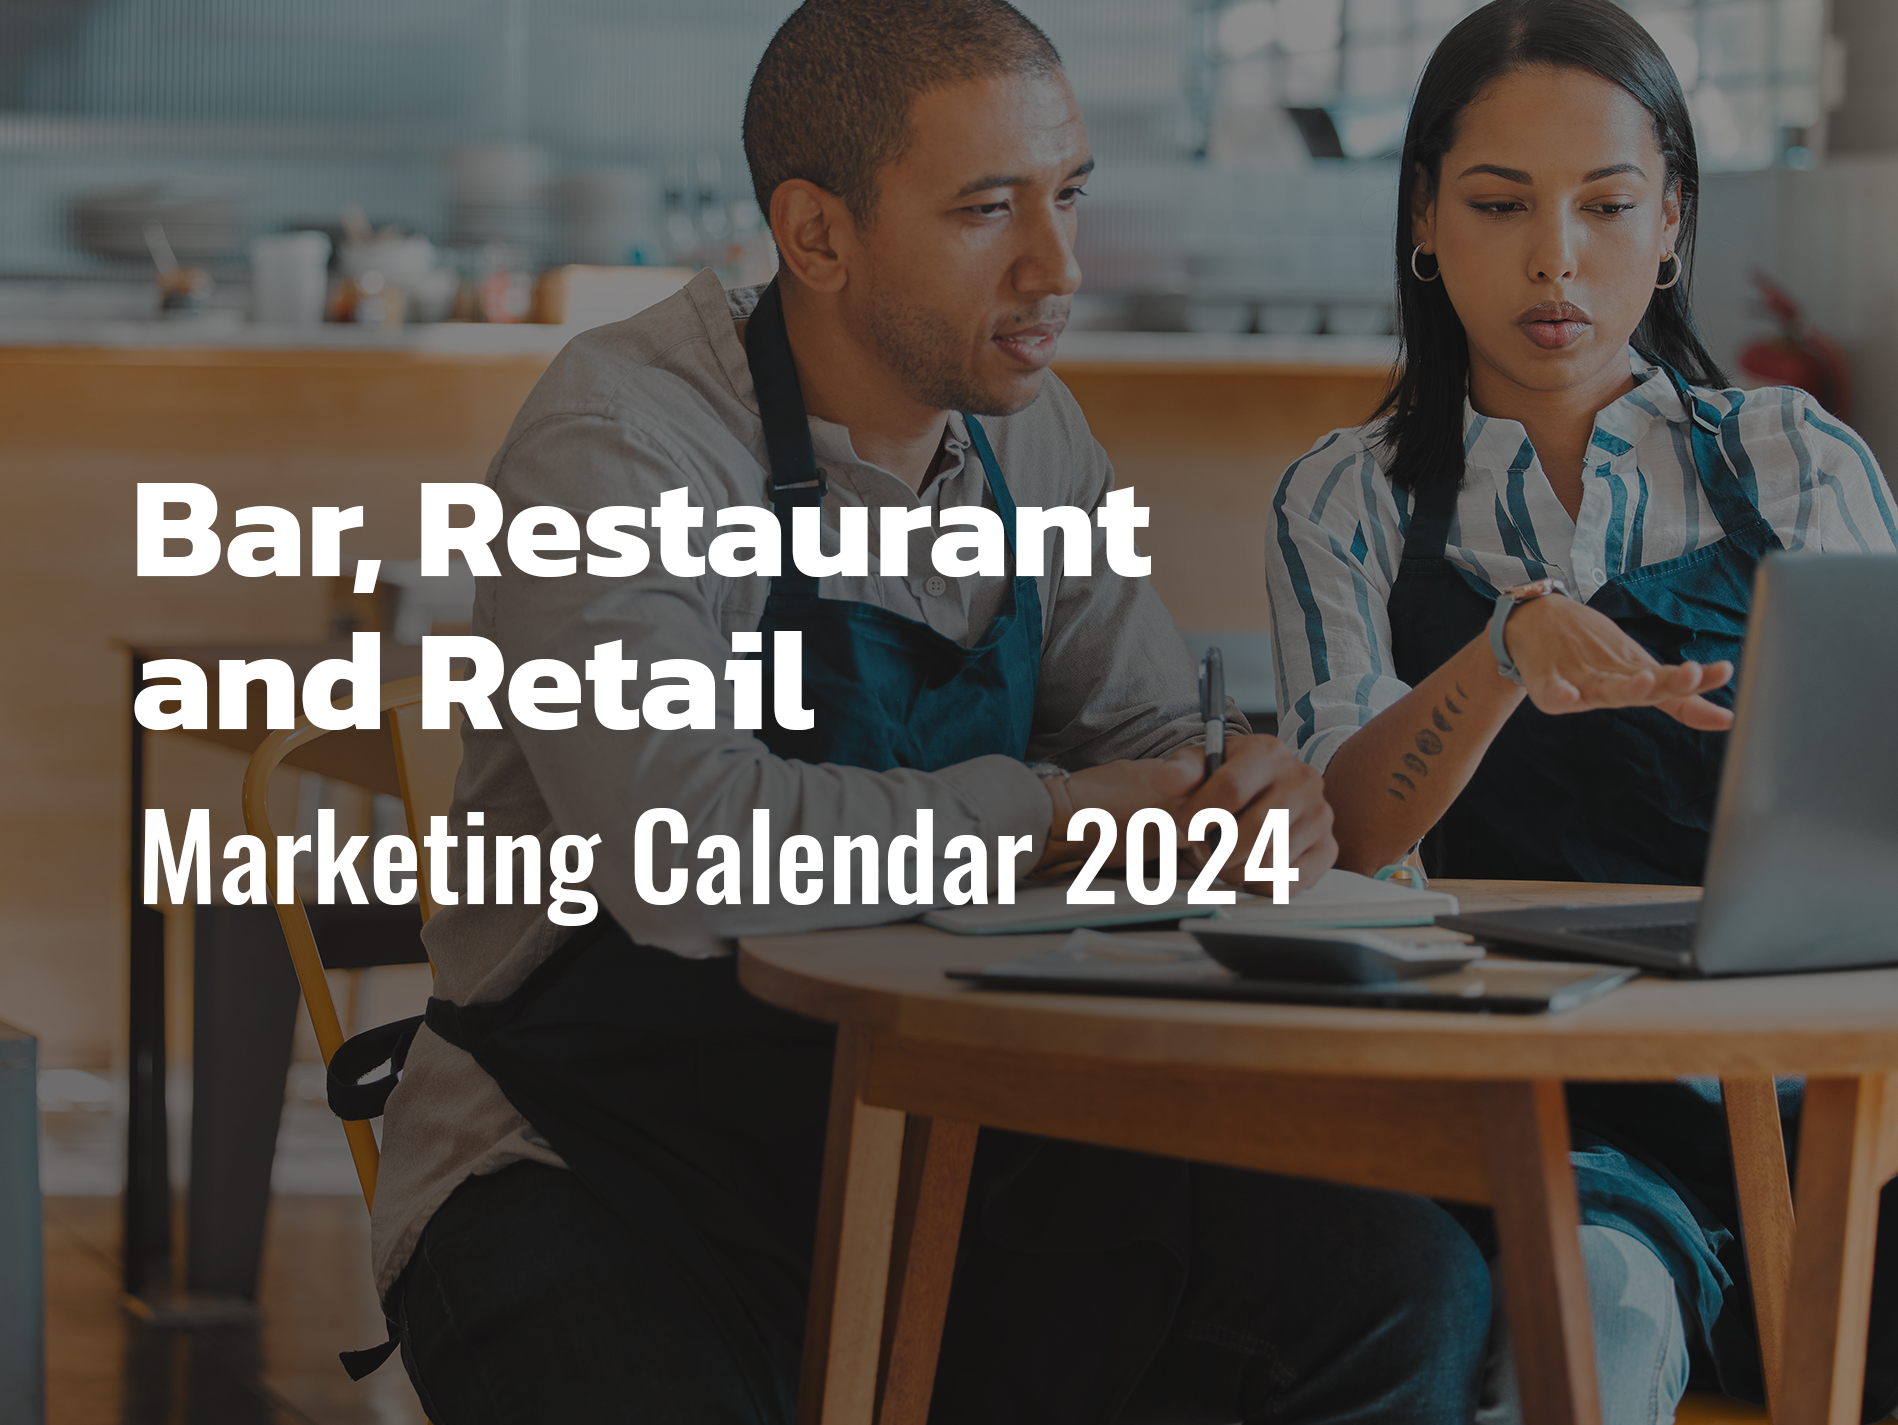 Bar, Restaurant and Retail Marketing Calendar 2024